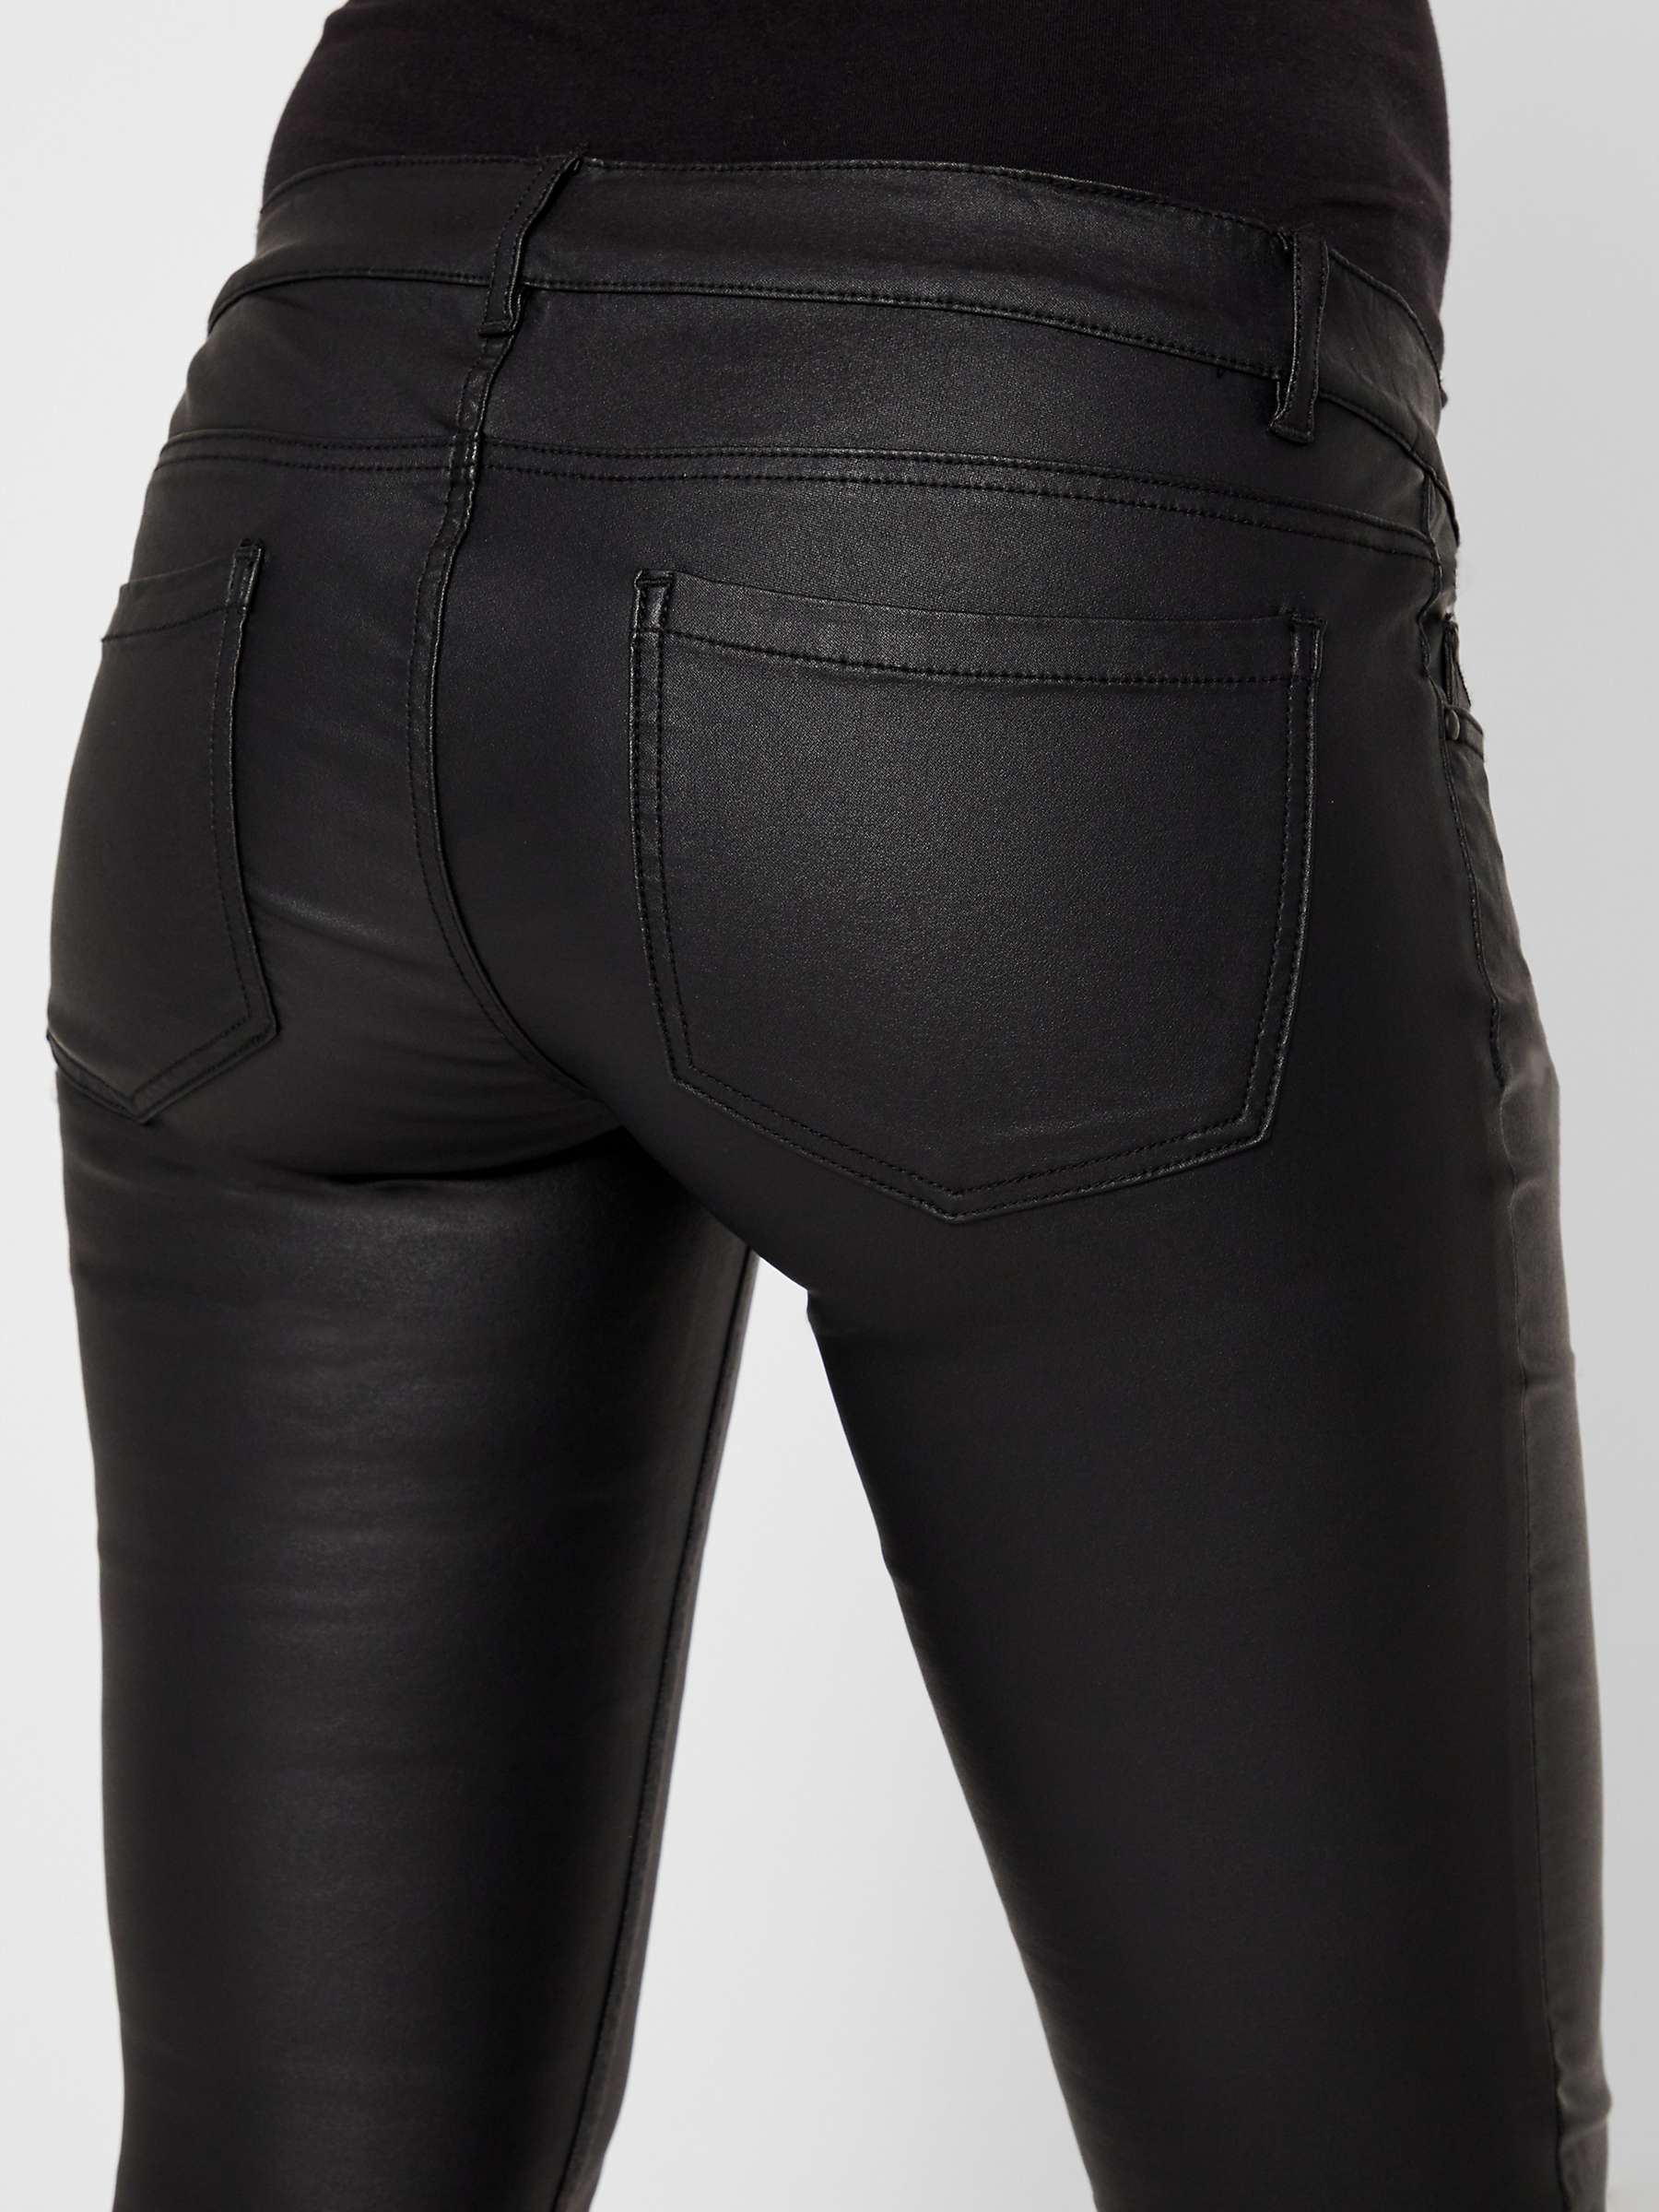 Buy Mamalicious Santos Plain Coated Slim Maternity Jeans, Black Online at johnlewis.com